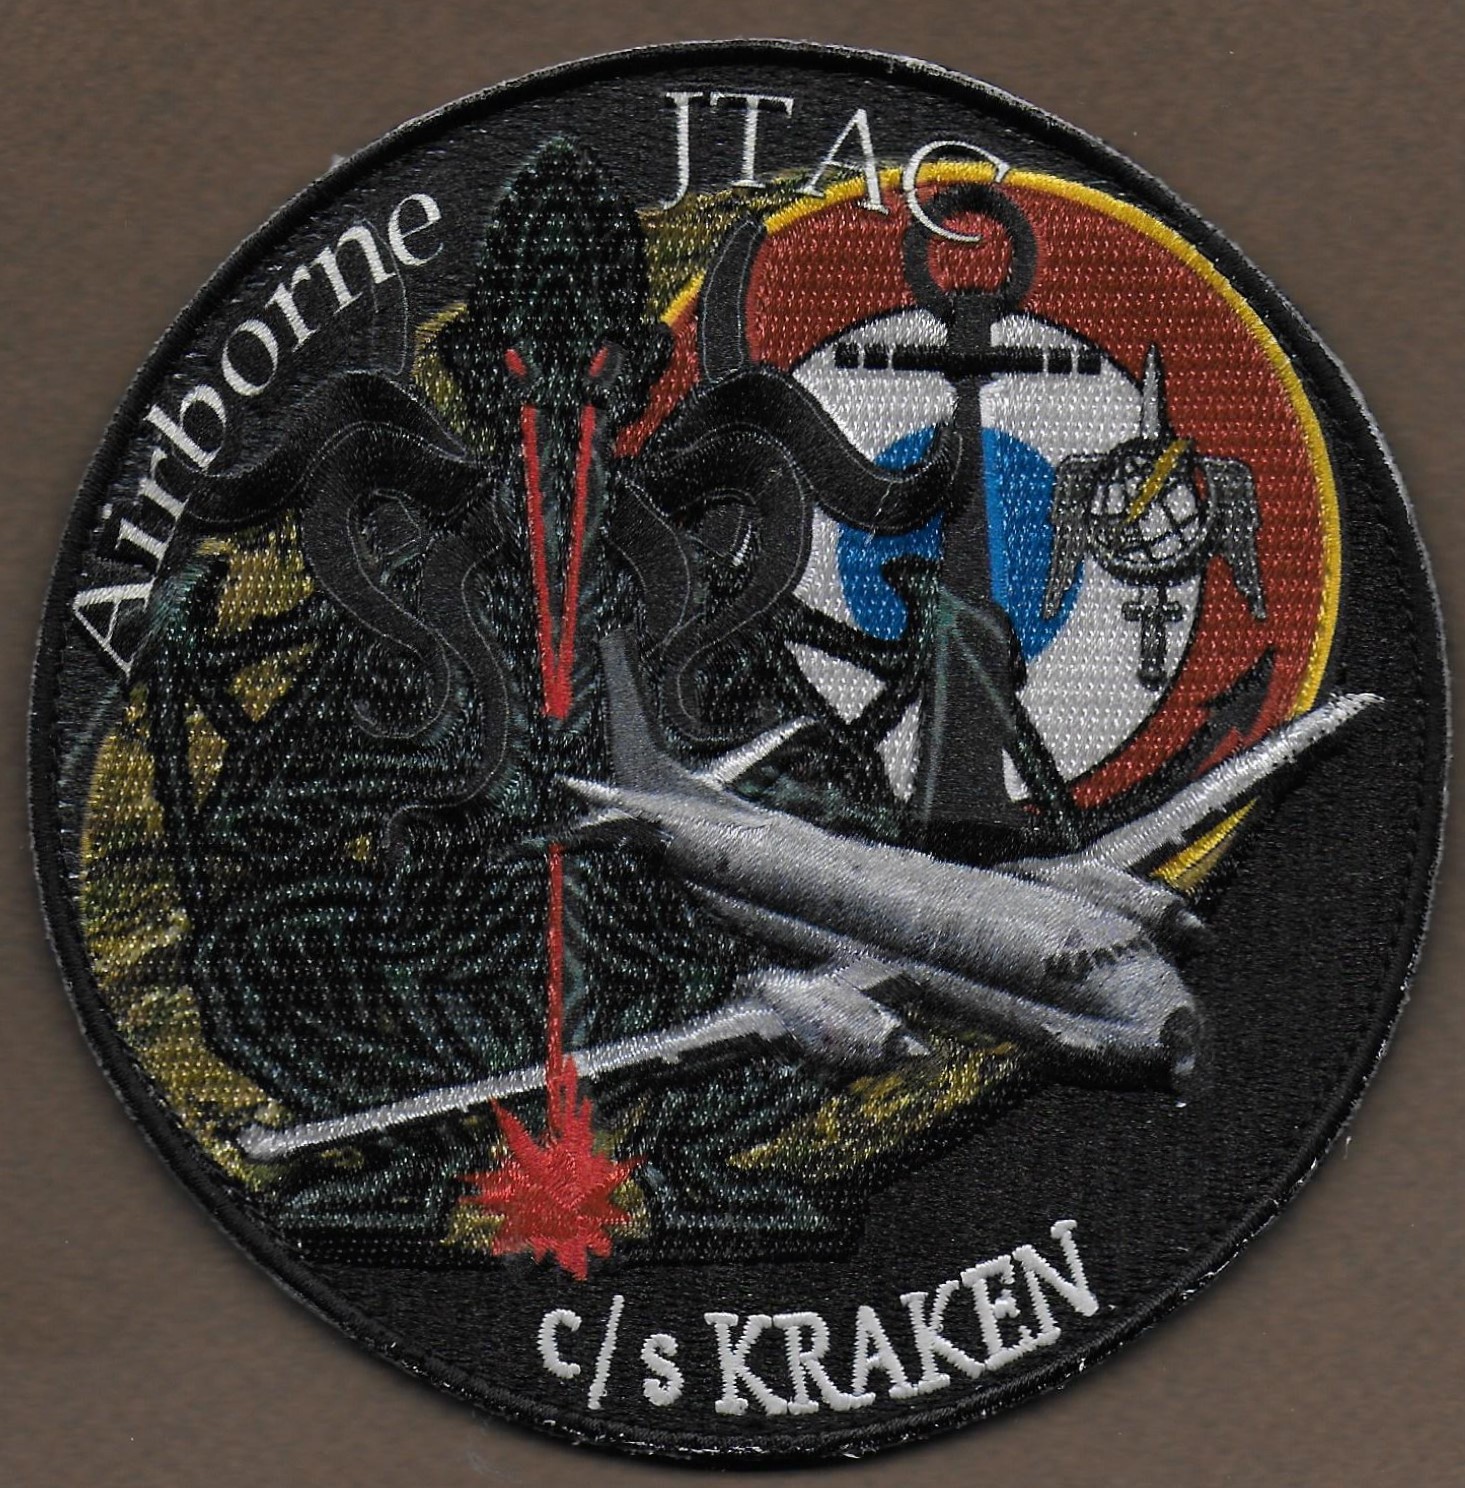 Airborne JTAC c_s KRAKEN - mod 2